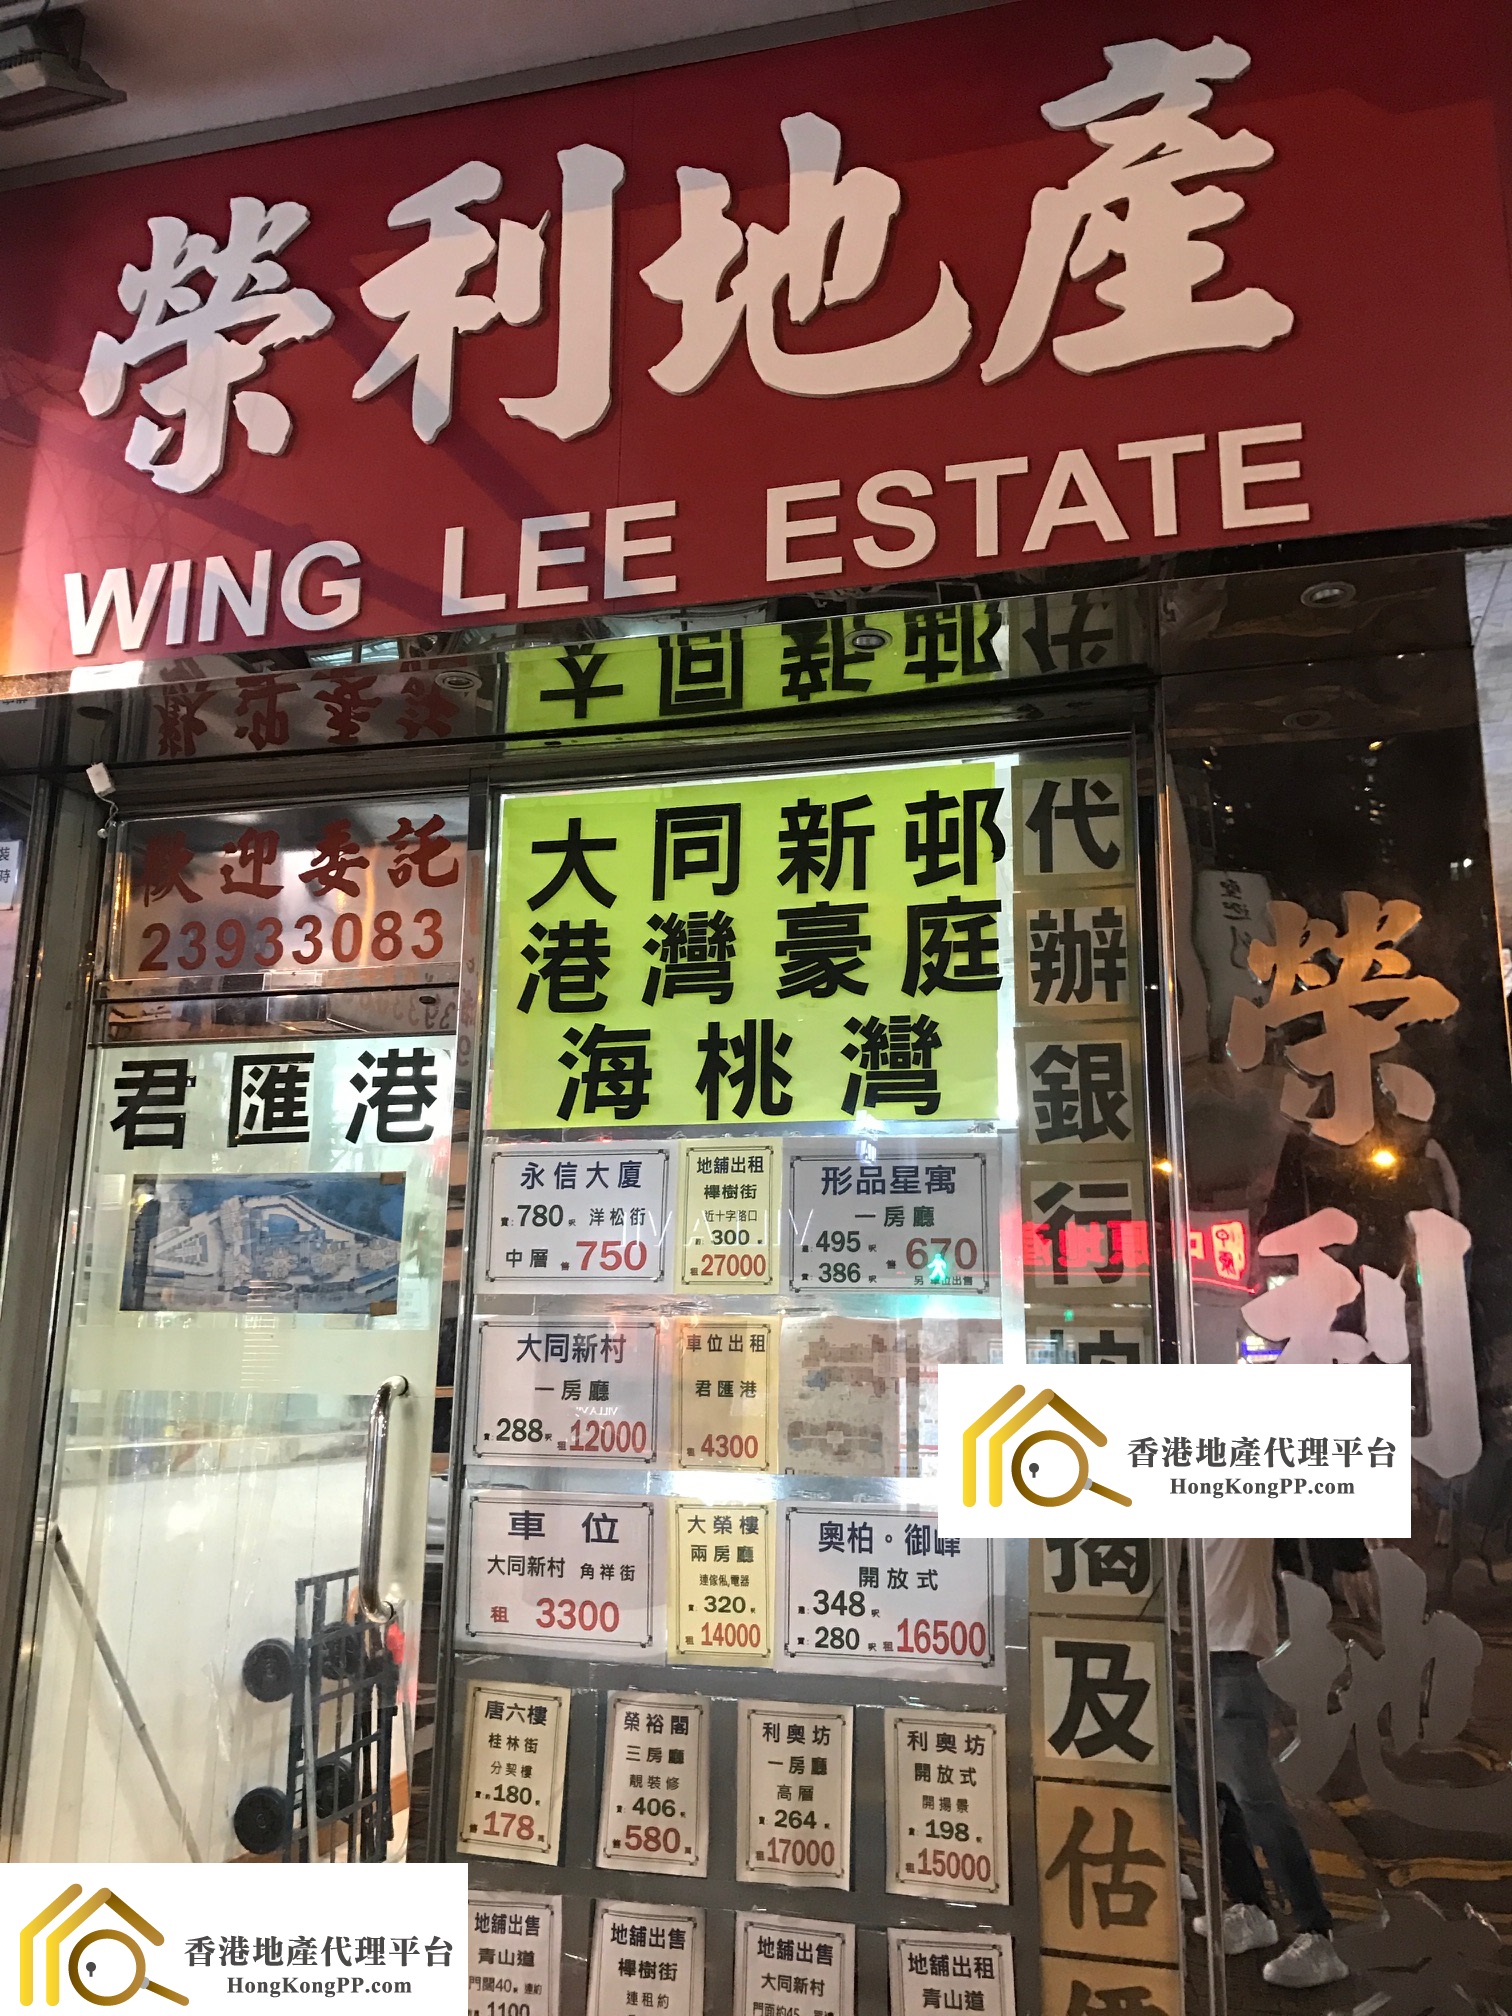 CarparkEstate Agent: 榮利地產 Wing Lee Estate